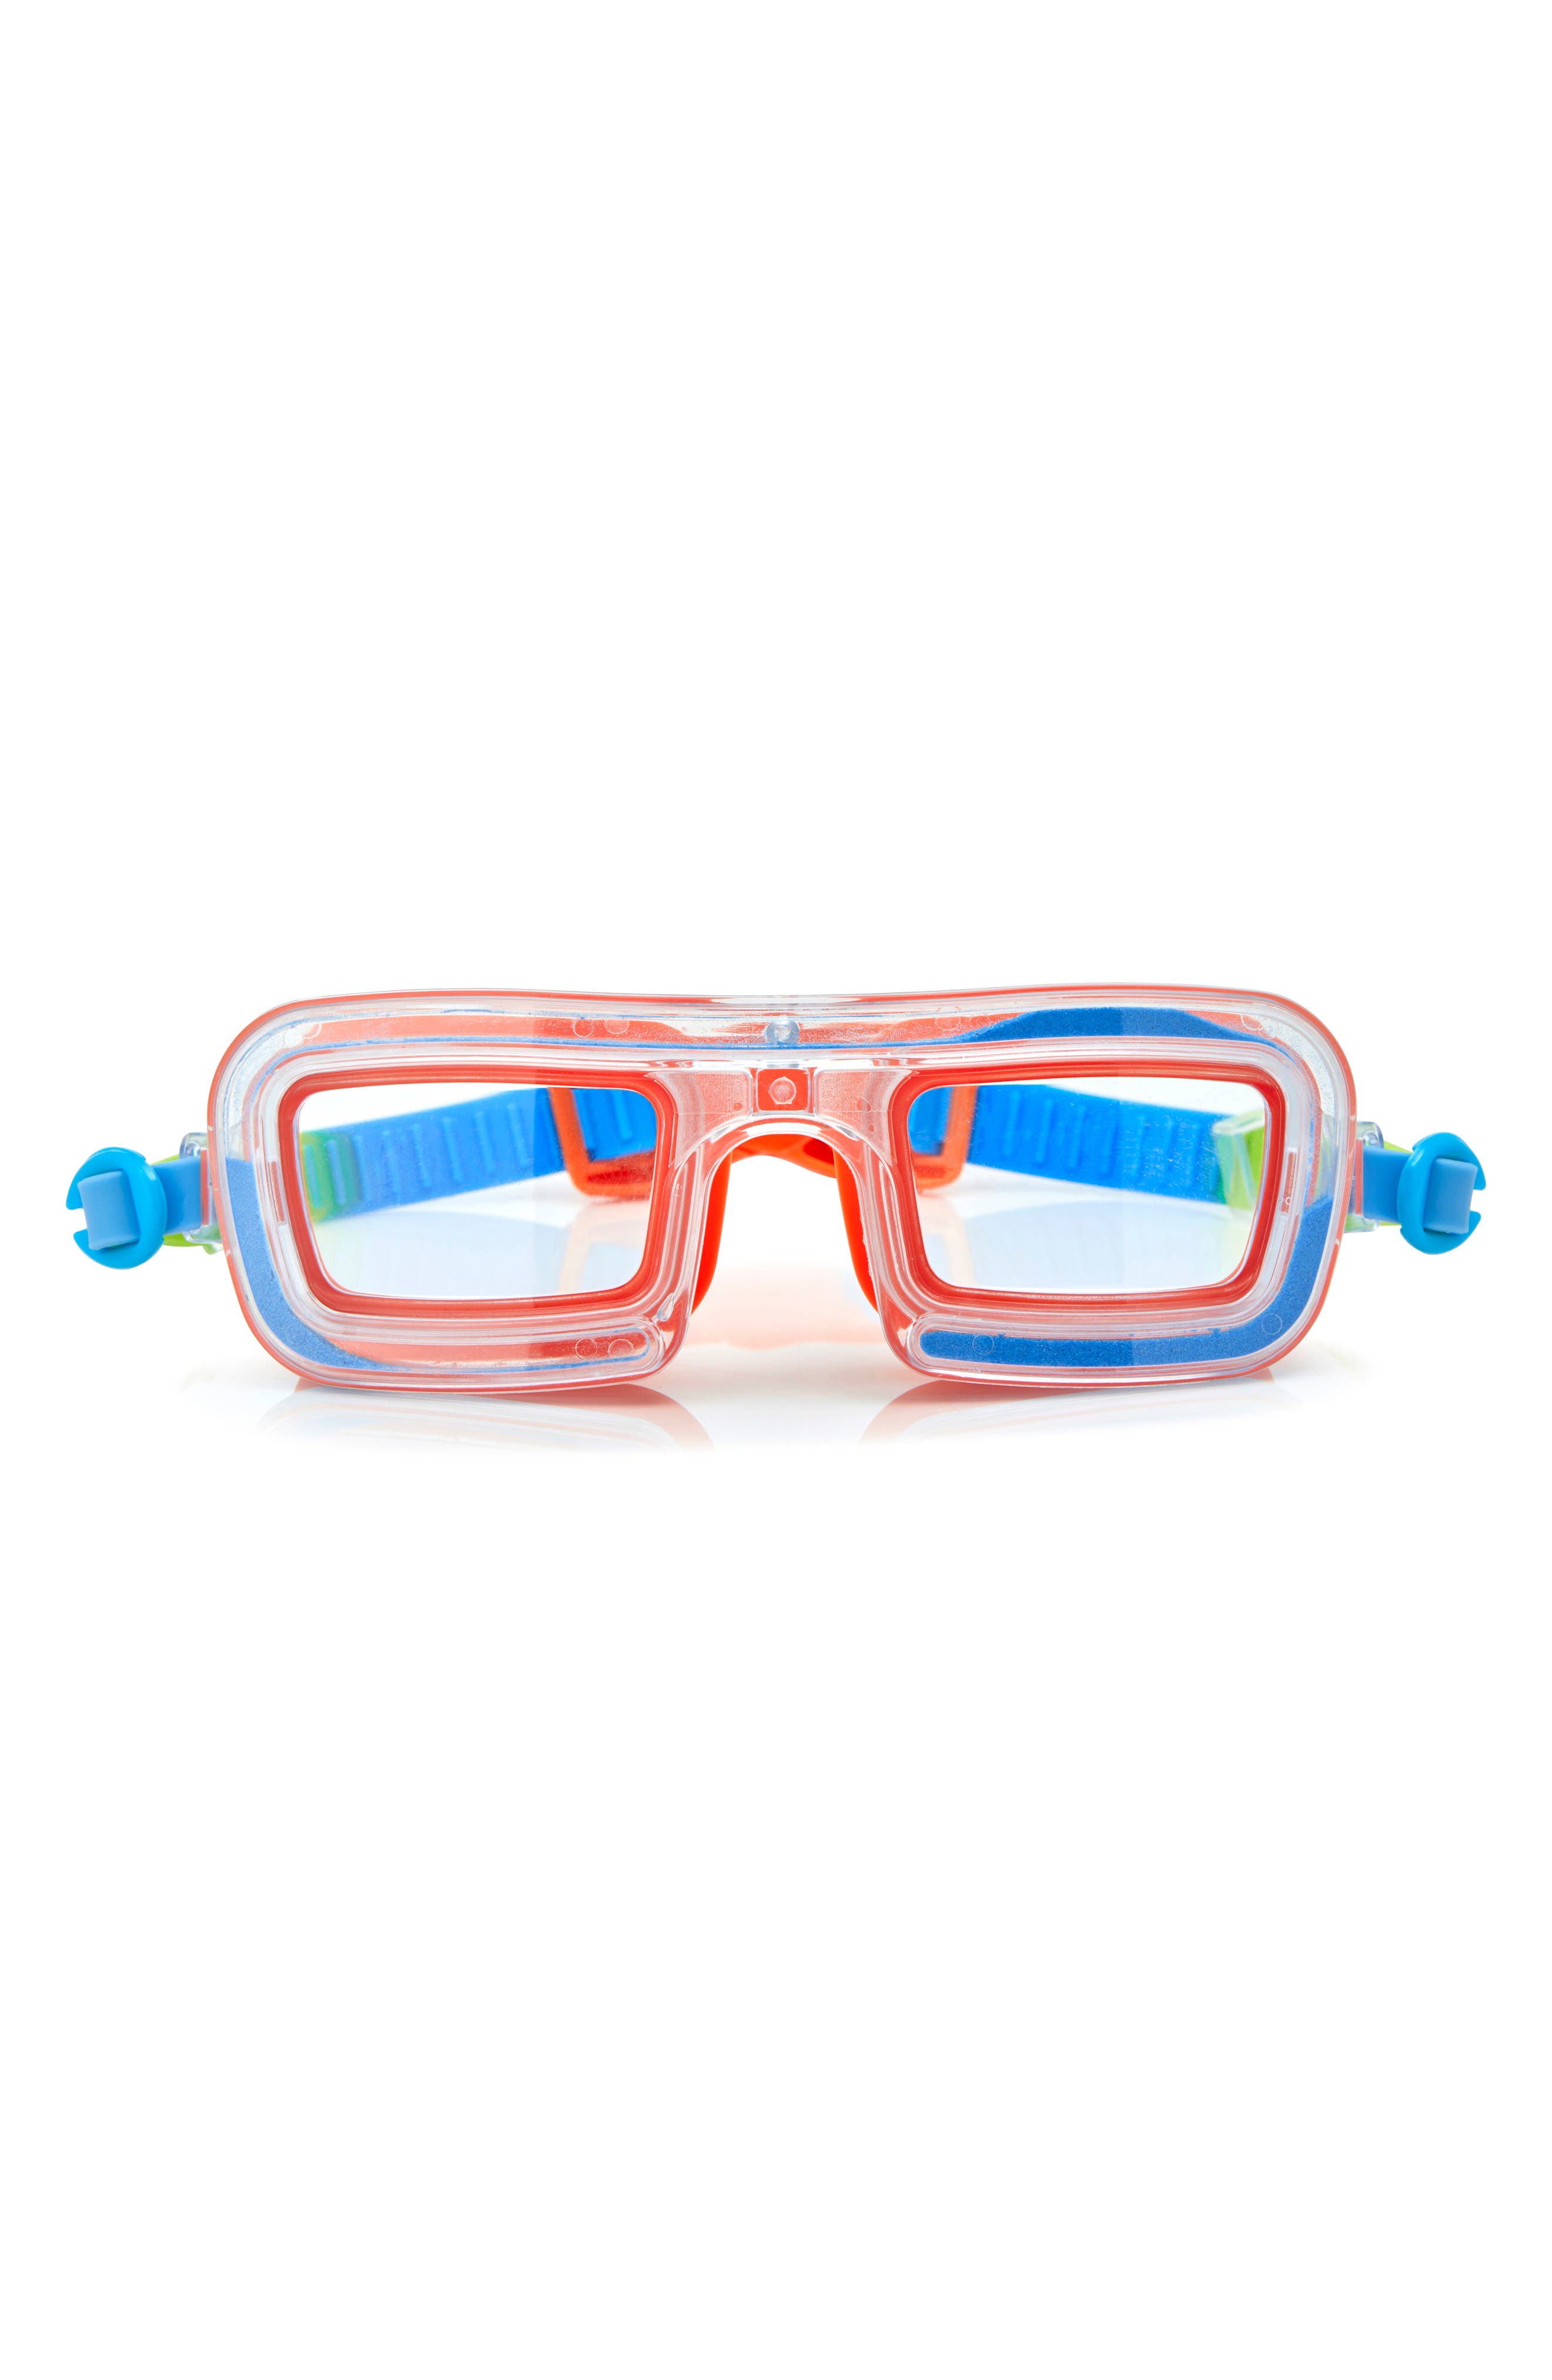 Shining Swimming Goggles bold anti fog  Swim Glasses UV 